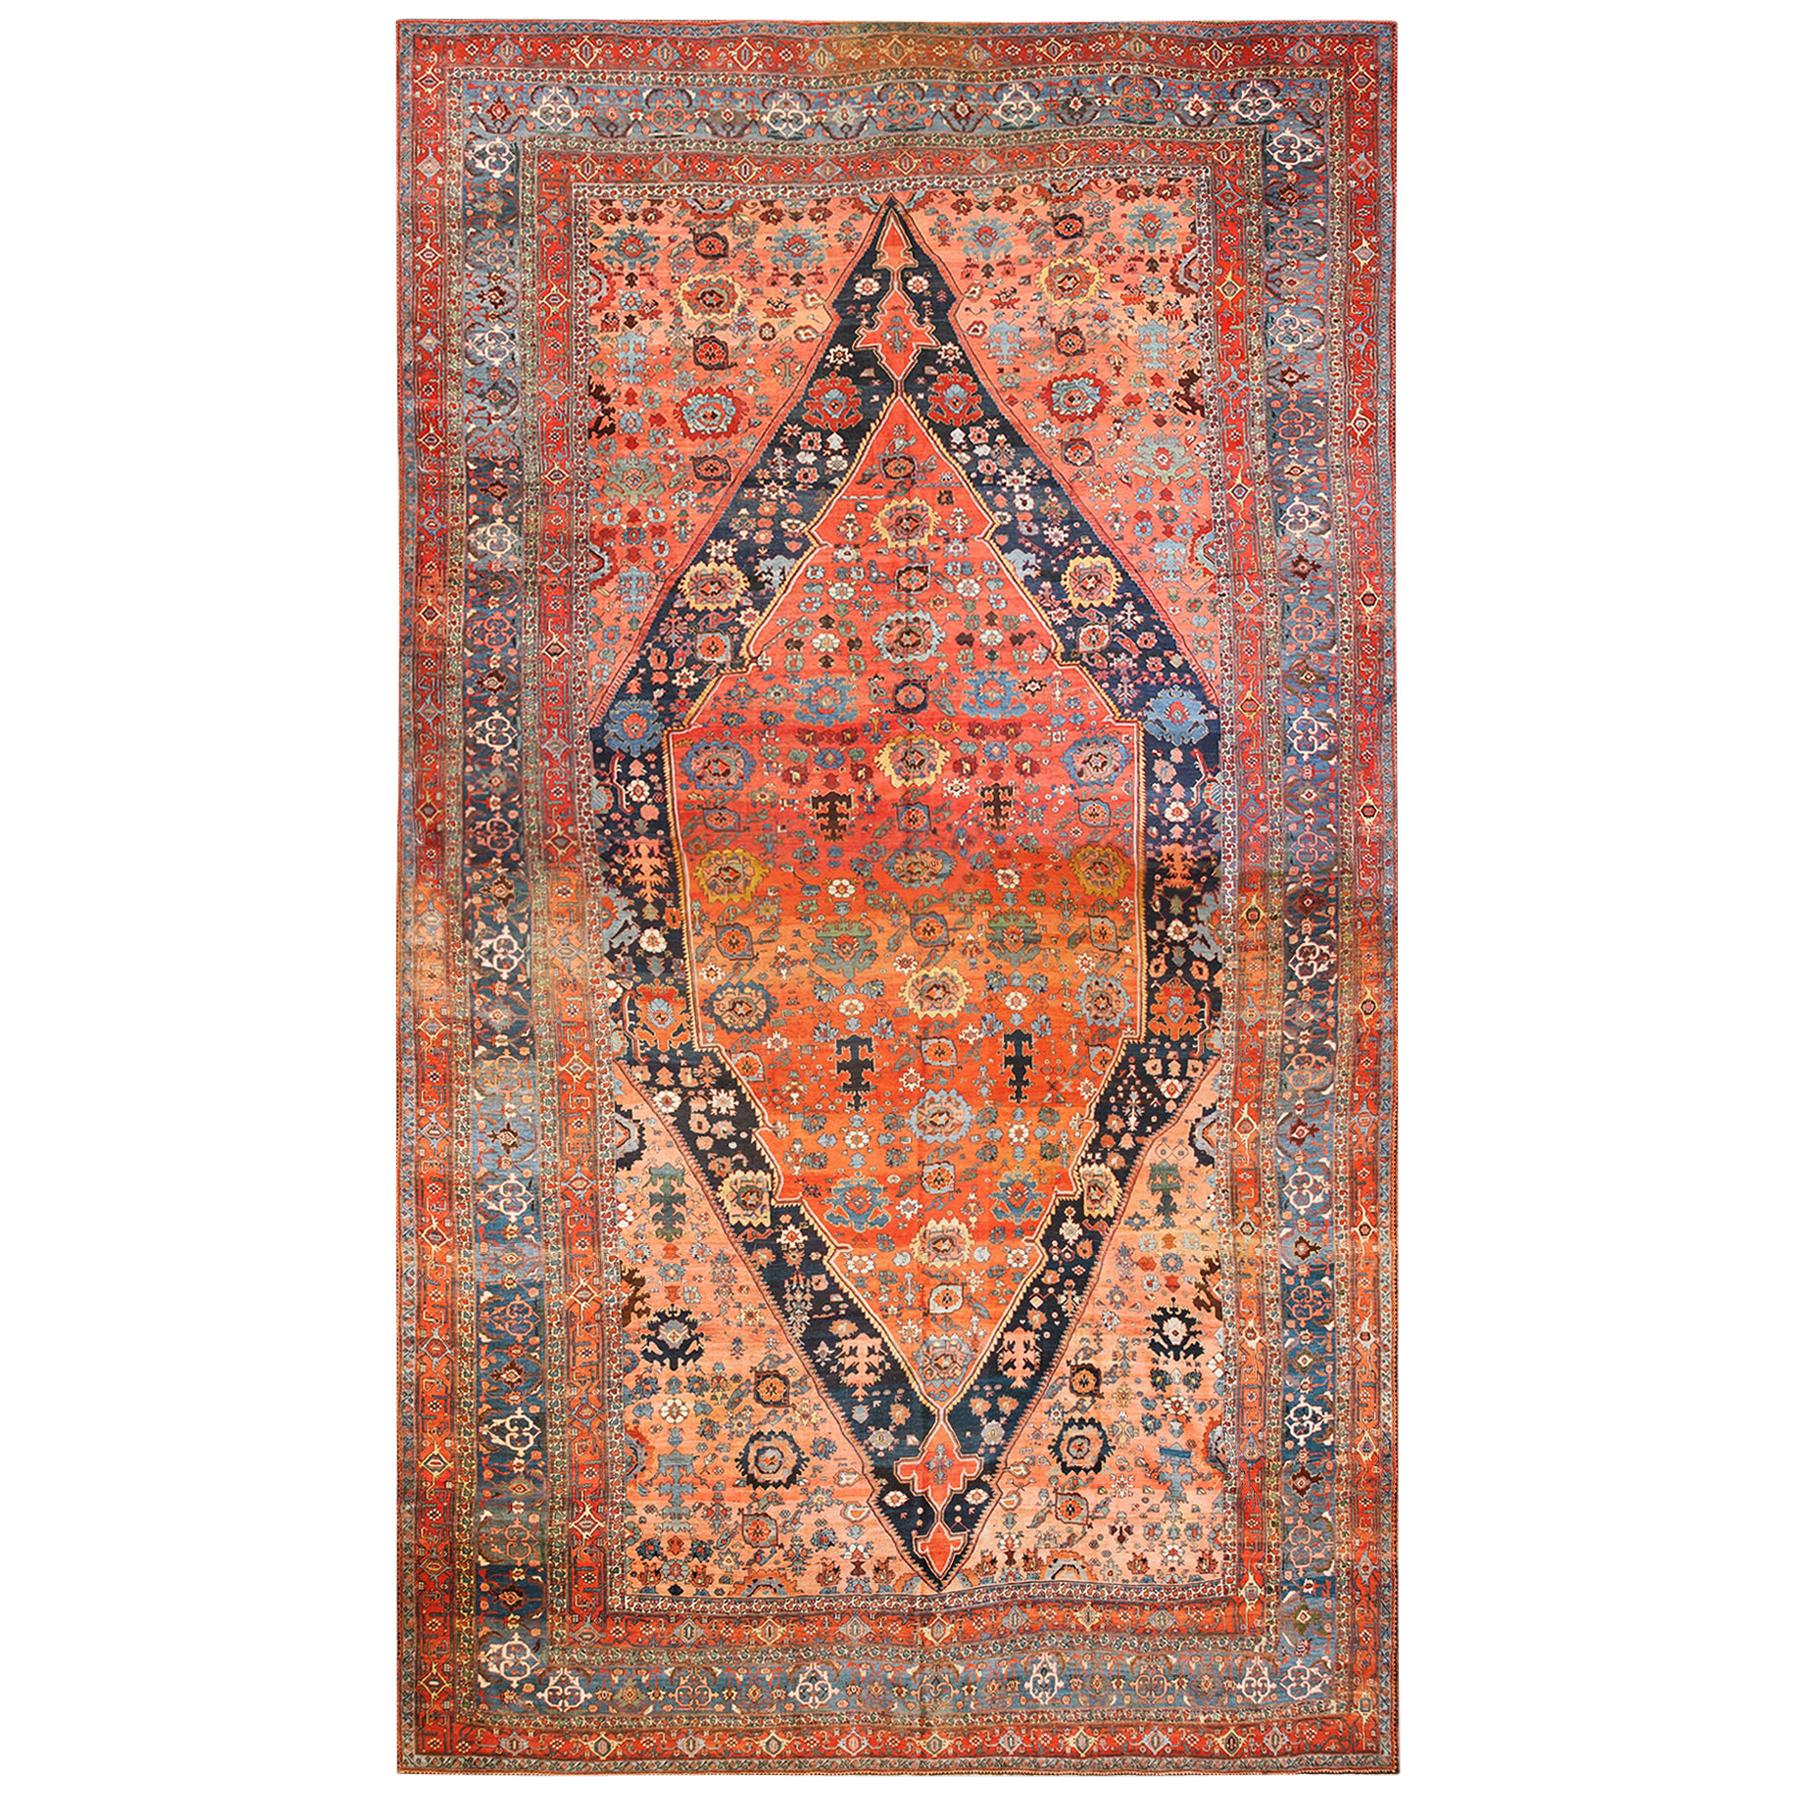 19th Century Persian Bijar Carpet  ( 15' x 25'9" - 457 x 785 cm )  For Sale